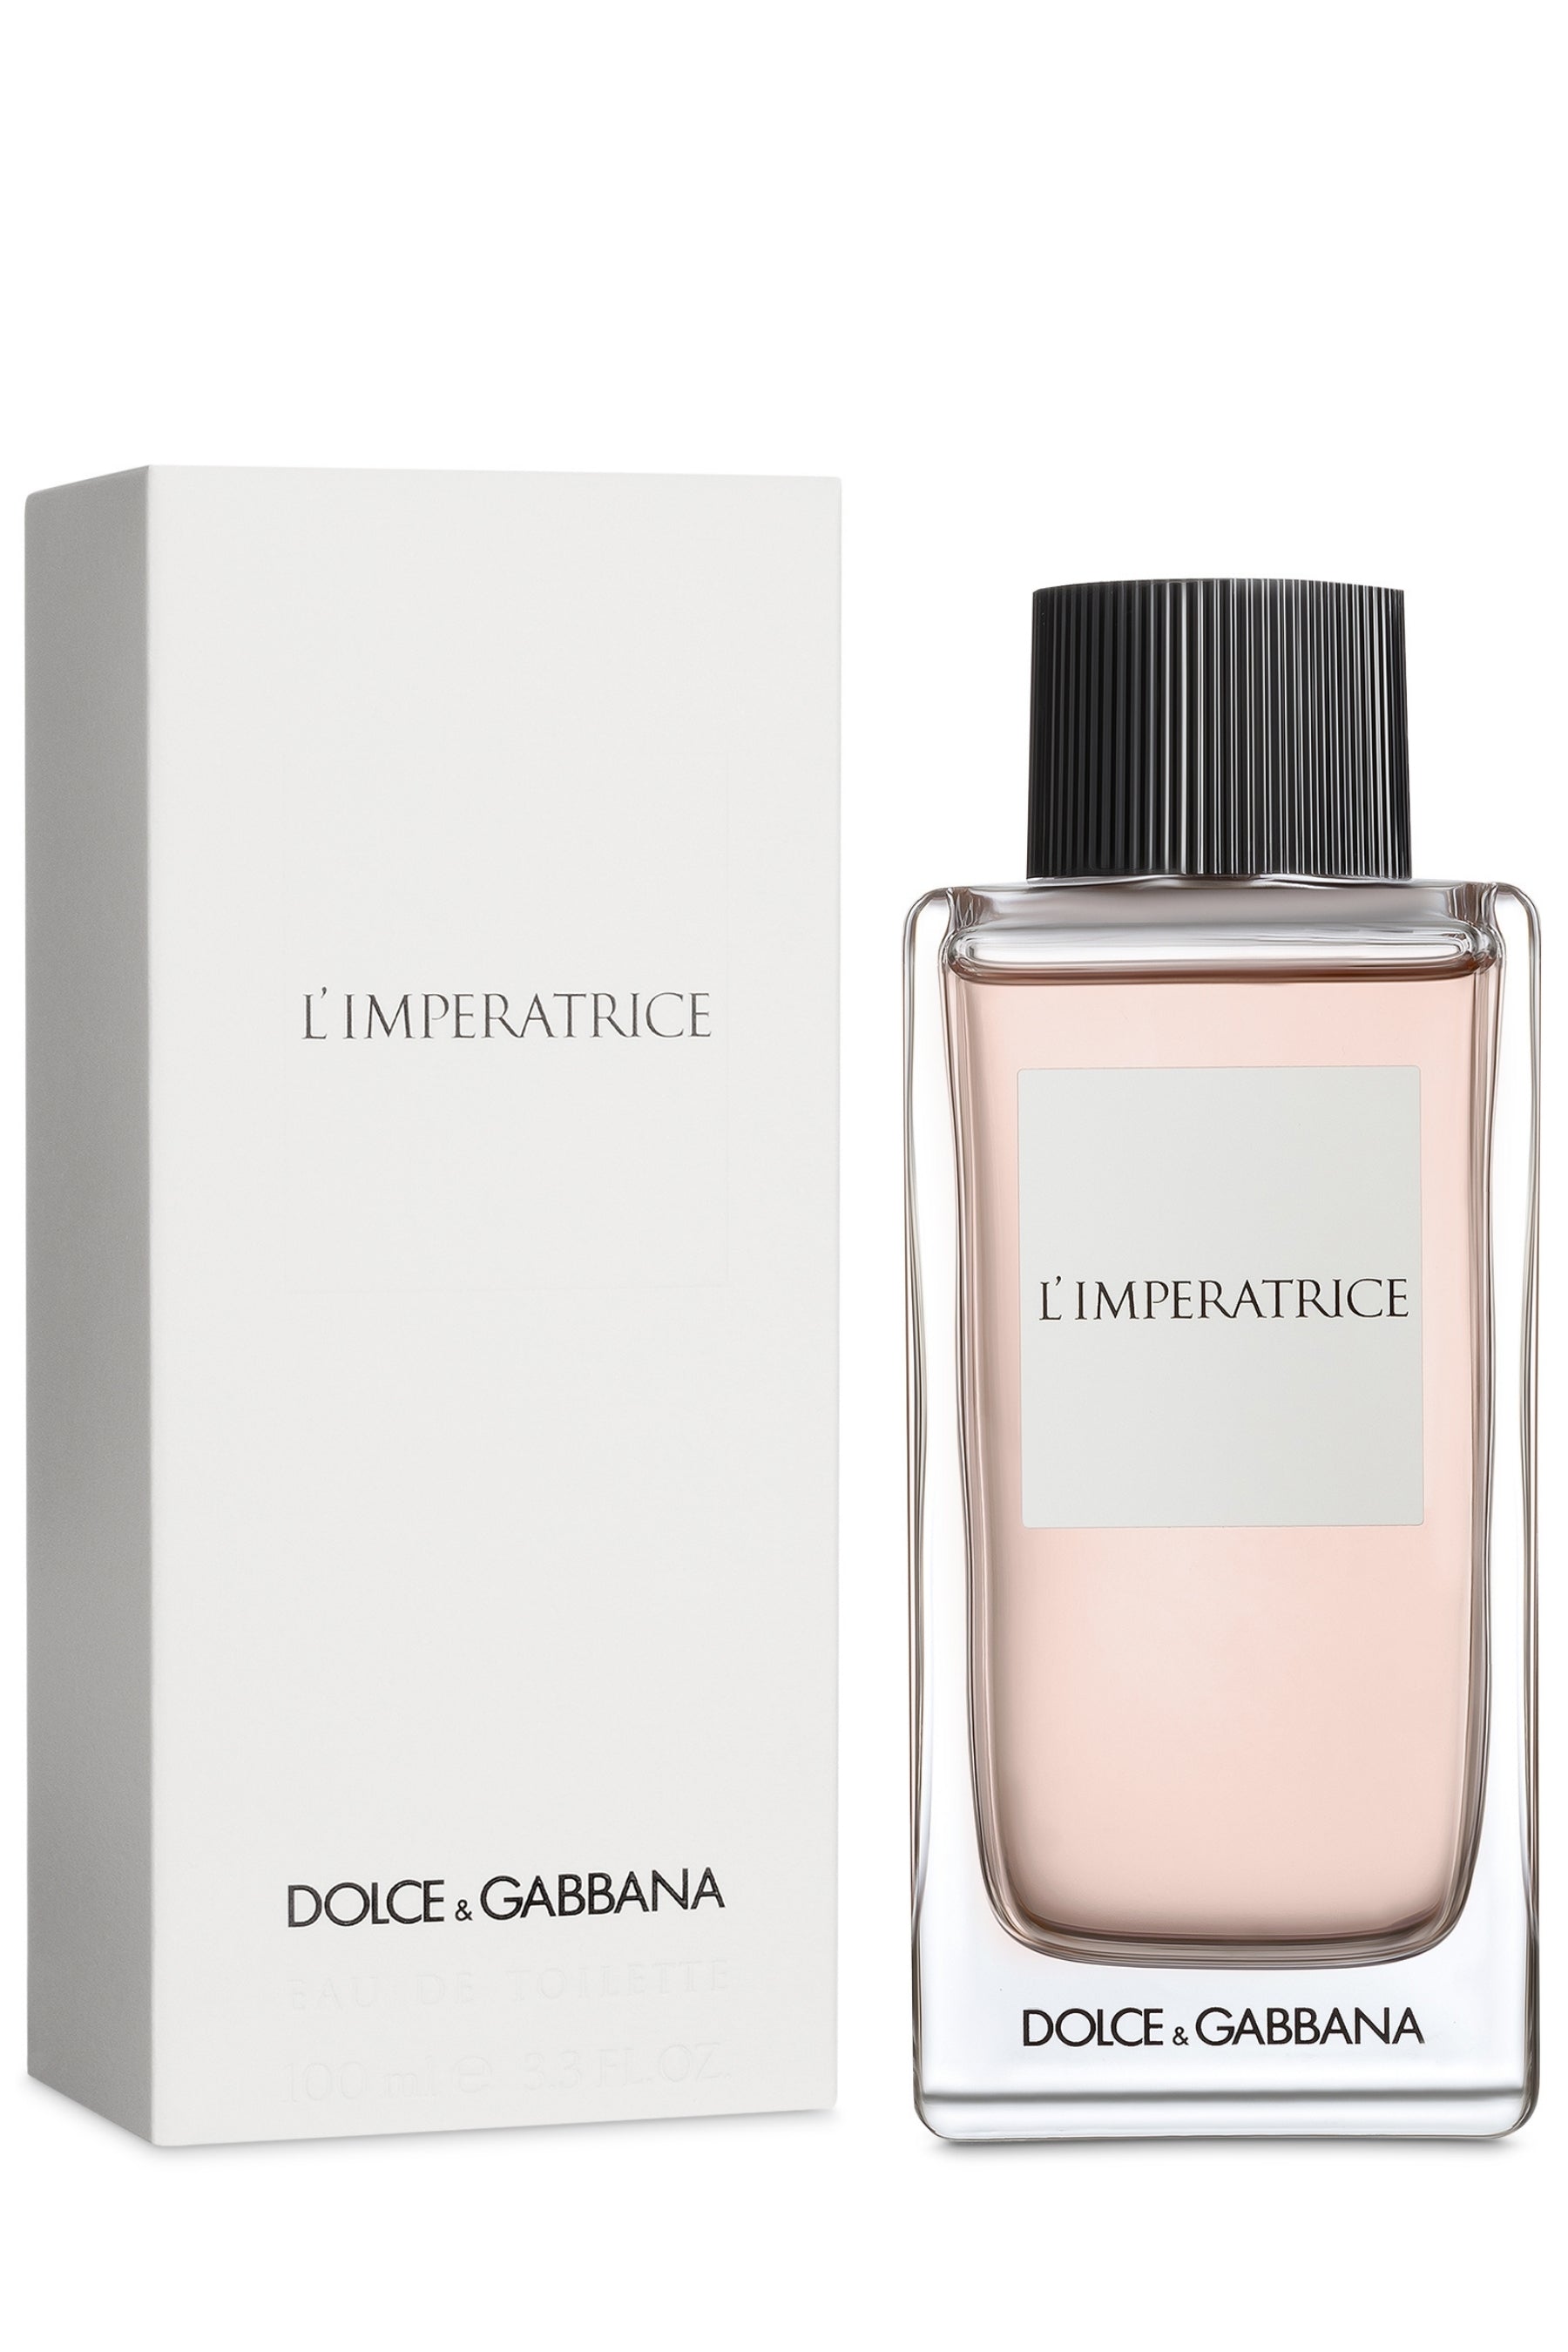 Hende selv Prestigefyldte Fortryd L'Imperatrice Perfume | Dolce and Gabbana | REBL Scents